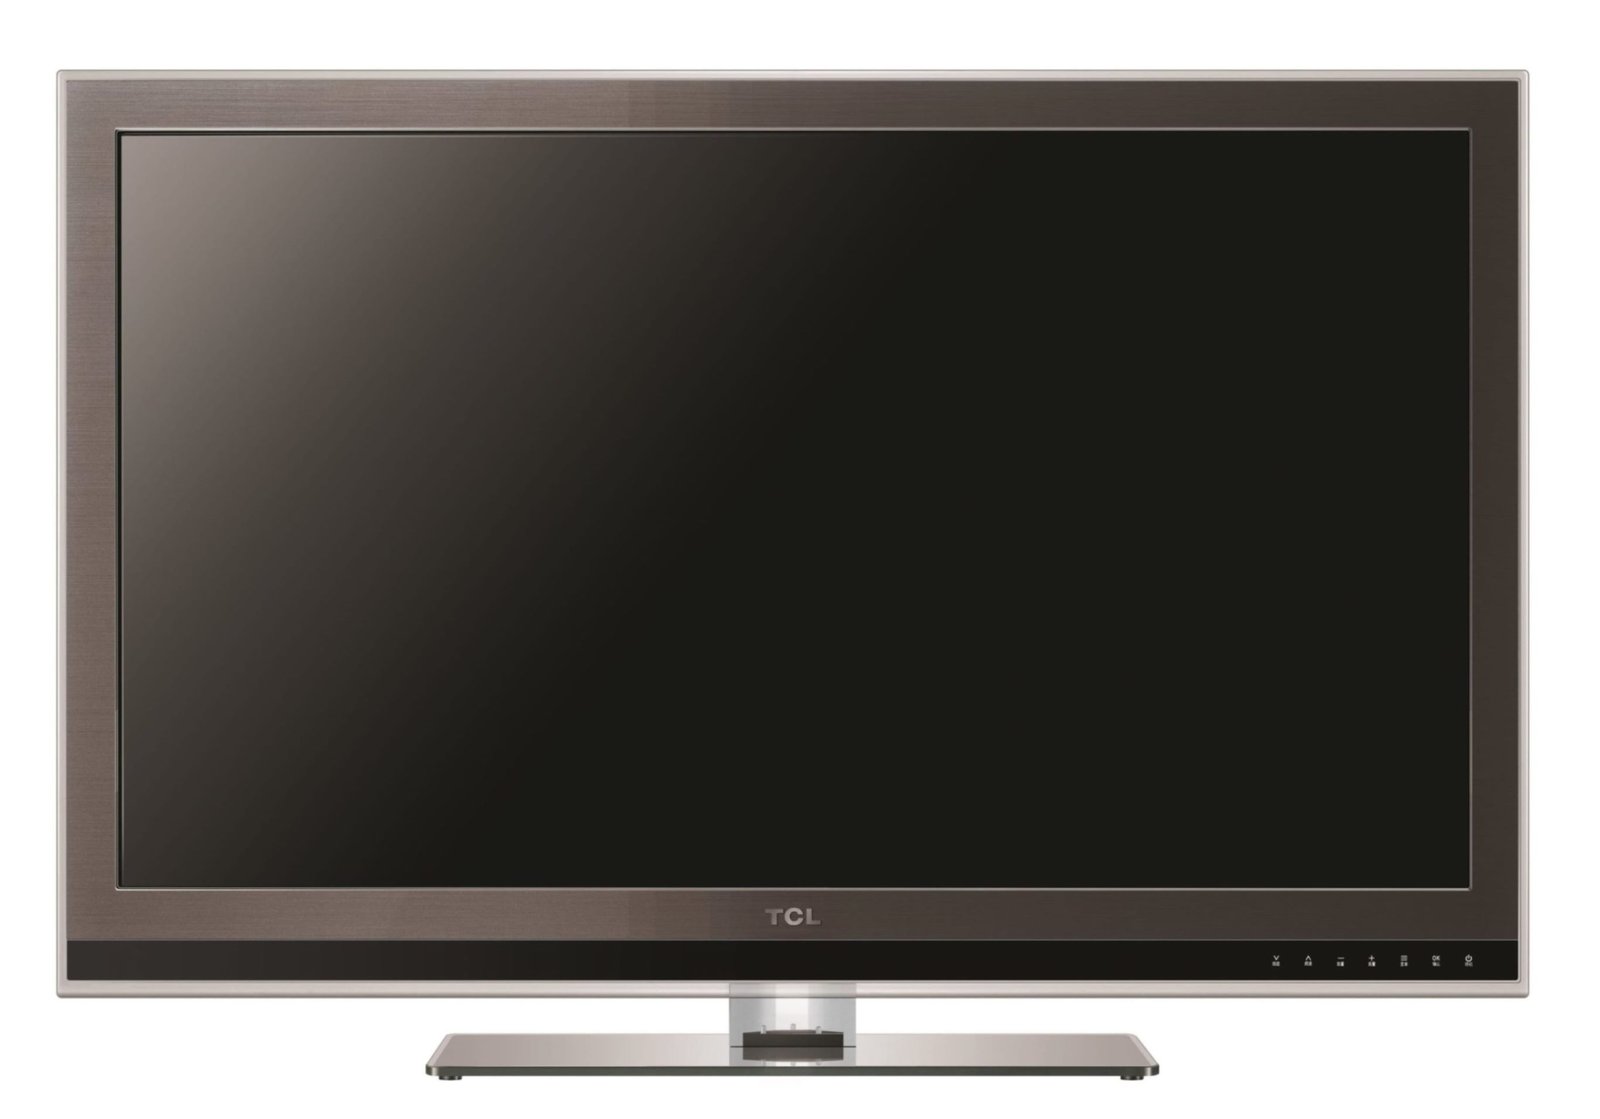 Выберите марку телевизора. Телевизор TCL 21185 21". Телевизор TCL 2010. TCL 32s5200. TCL телевизор 32 2010 года.